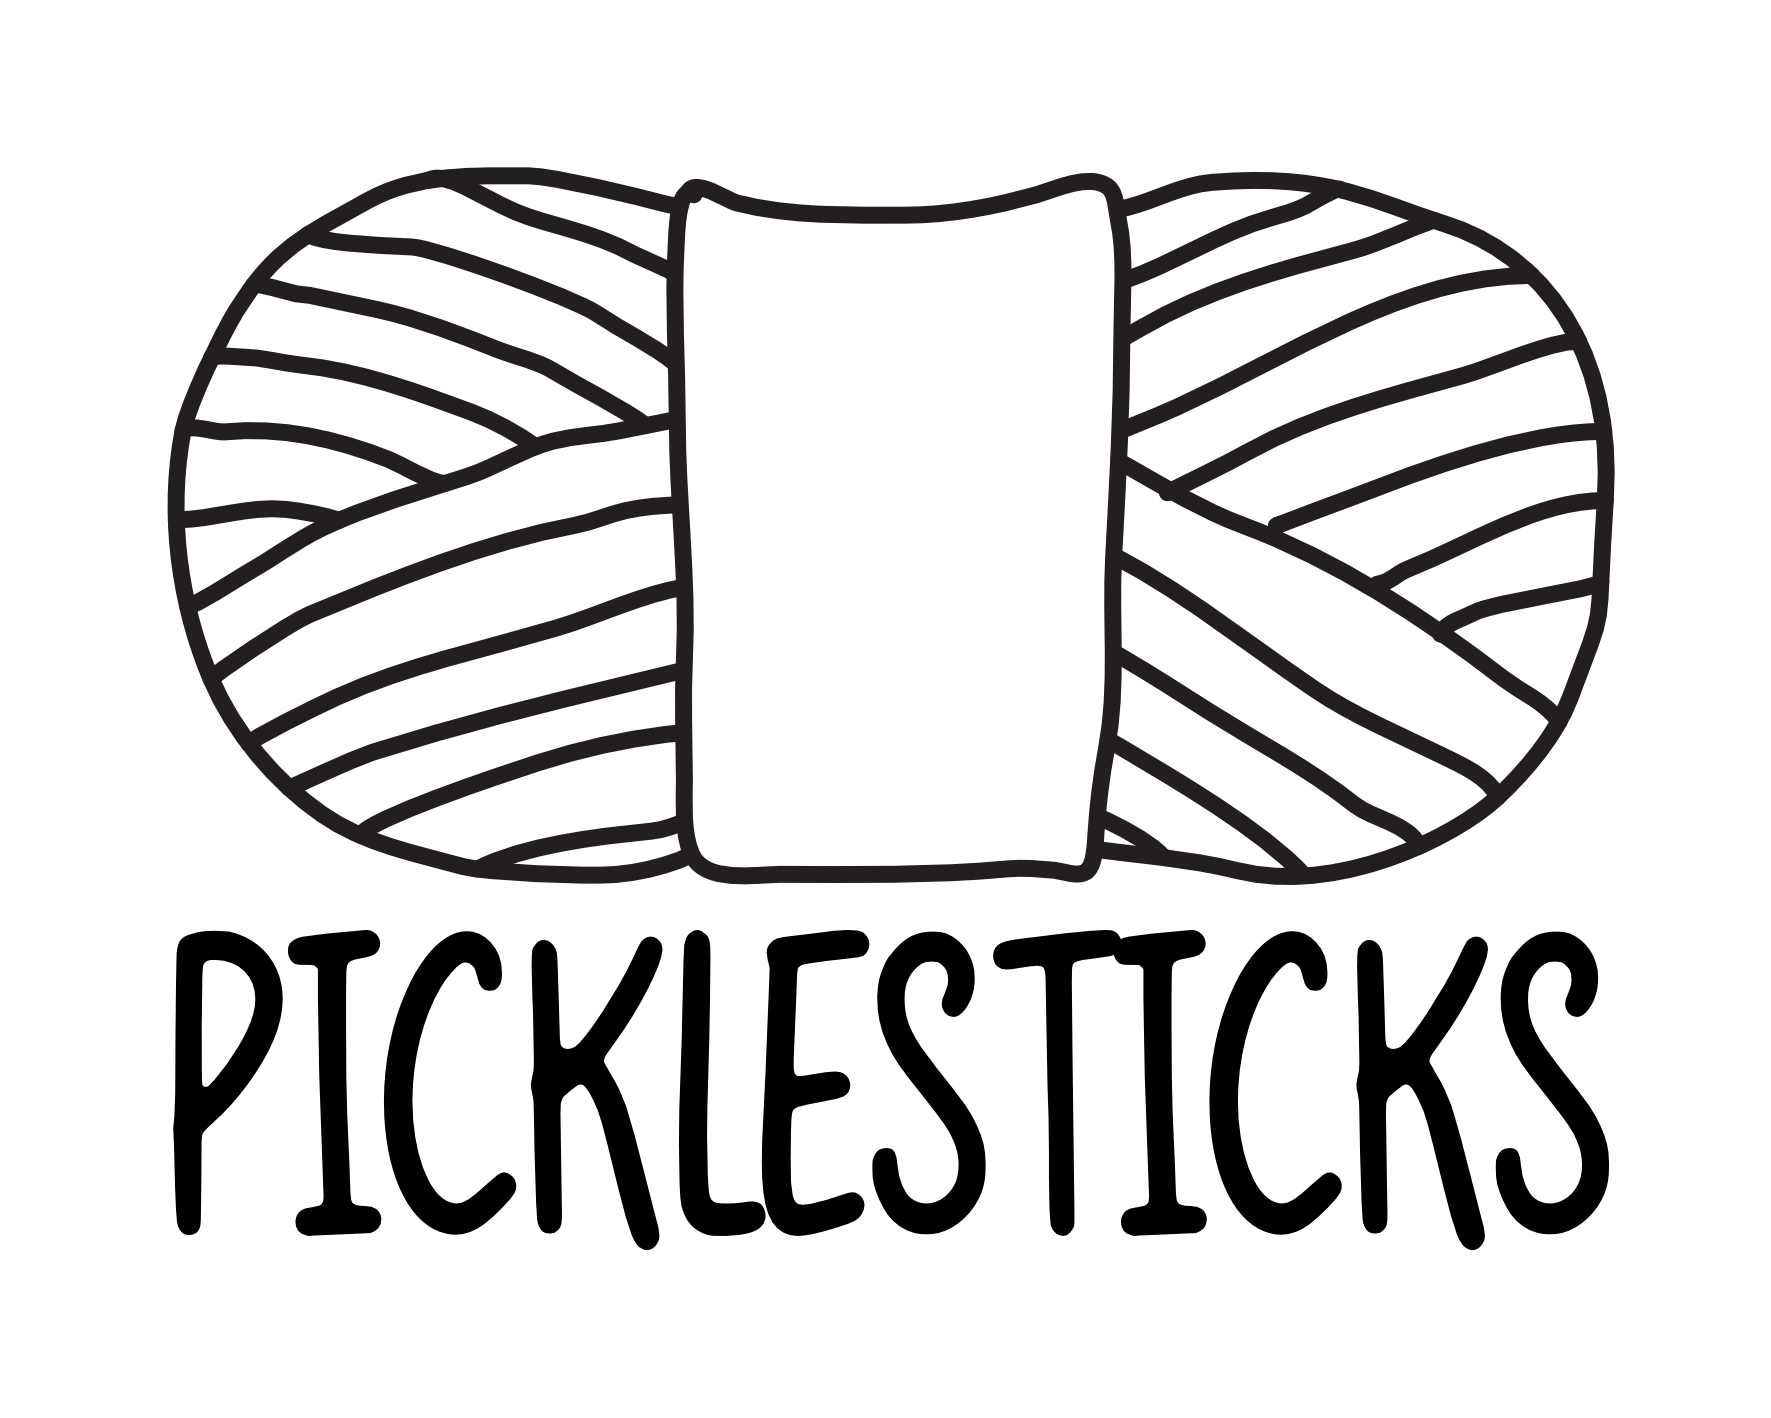 Picklesticks